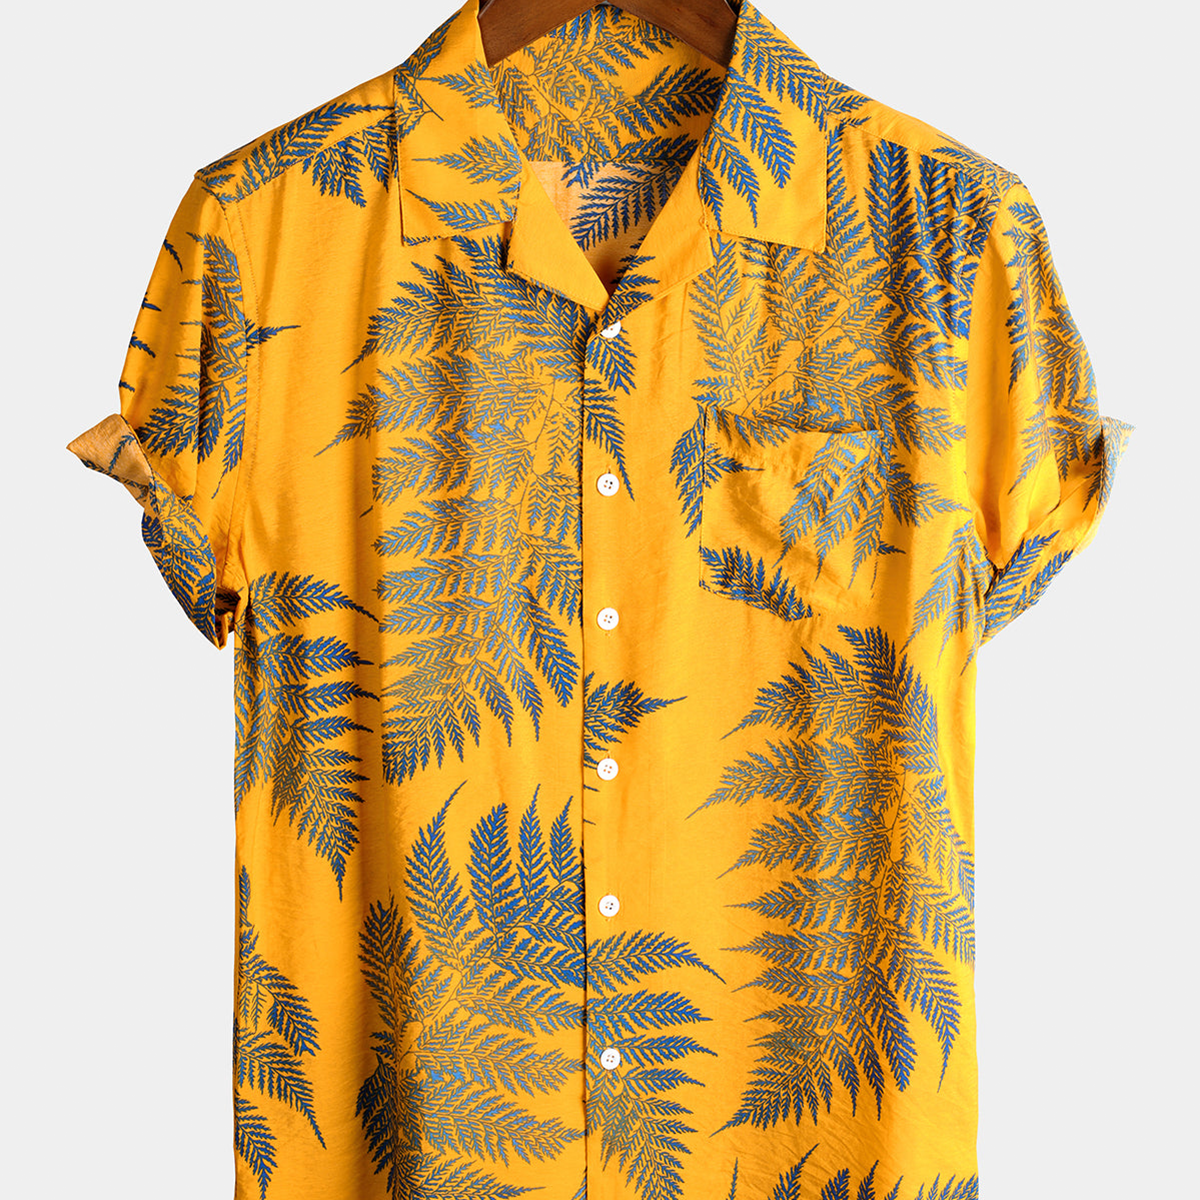 Men's Tropical Leaf Print Hawaiian Pocket Collared Top Cotton Button Up Short Sleeve Shirt